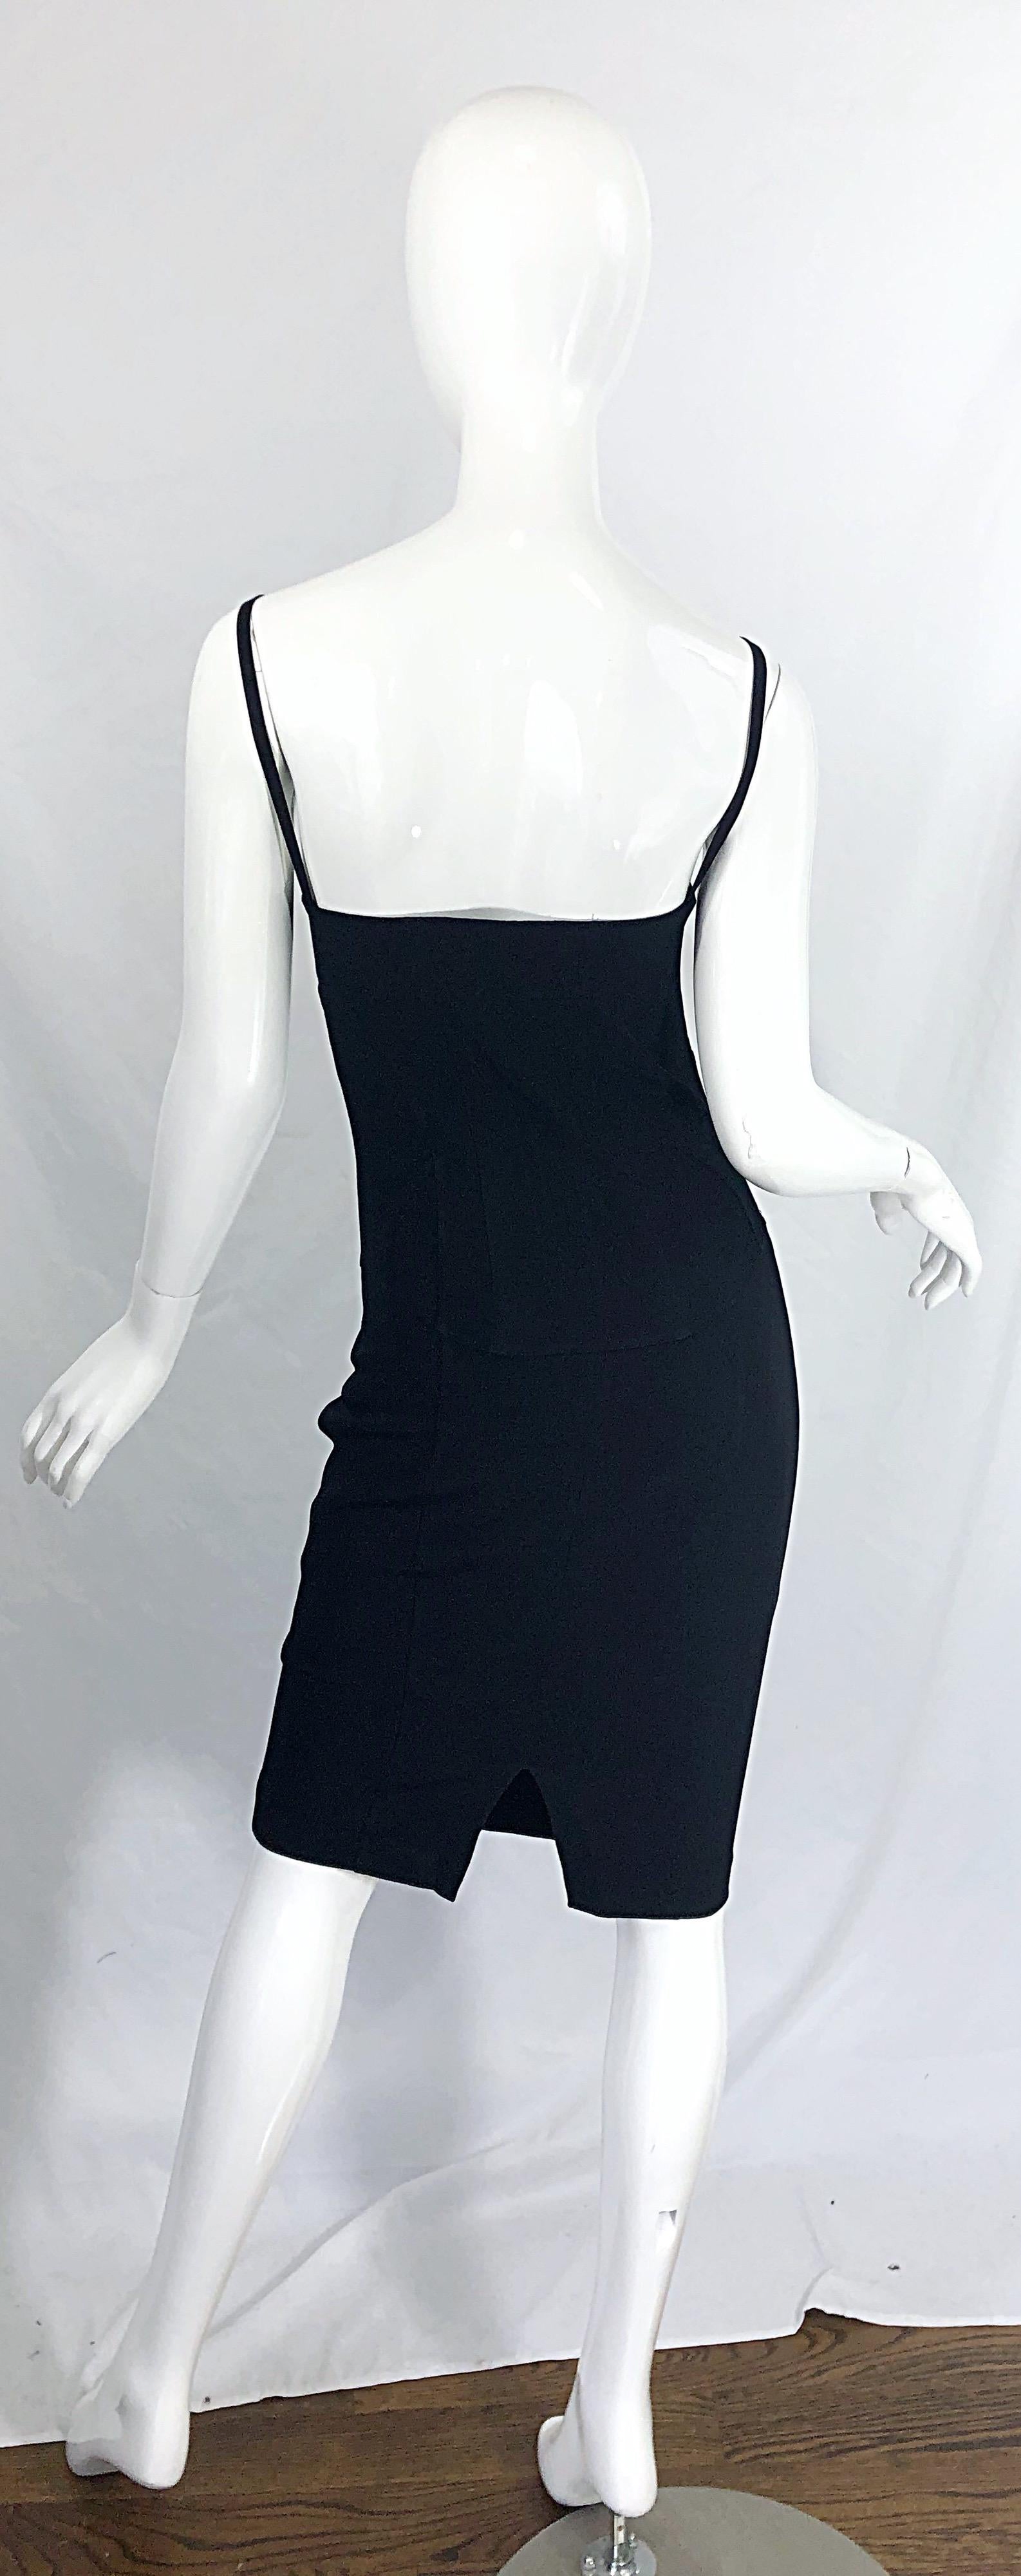 1990s Dolce & Gabbana Black Corset Dress Size 42 US 6 - 8 Vintage 90s Iconic LBD For Sale 6